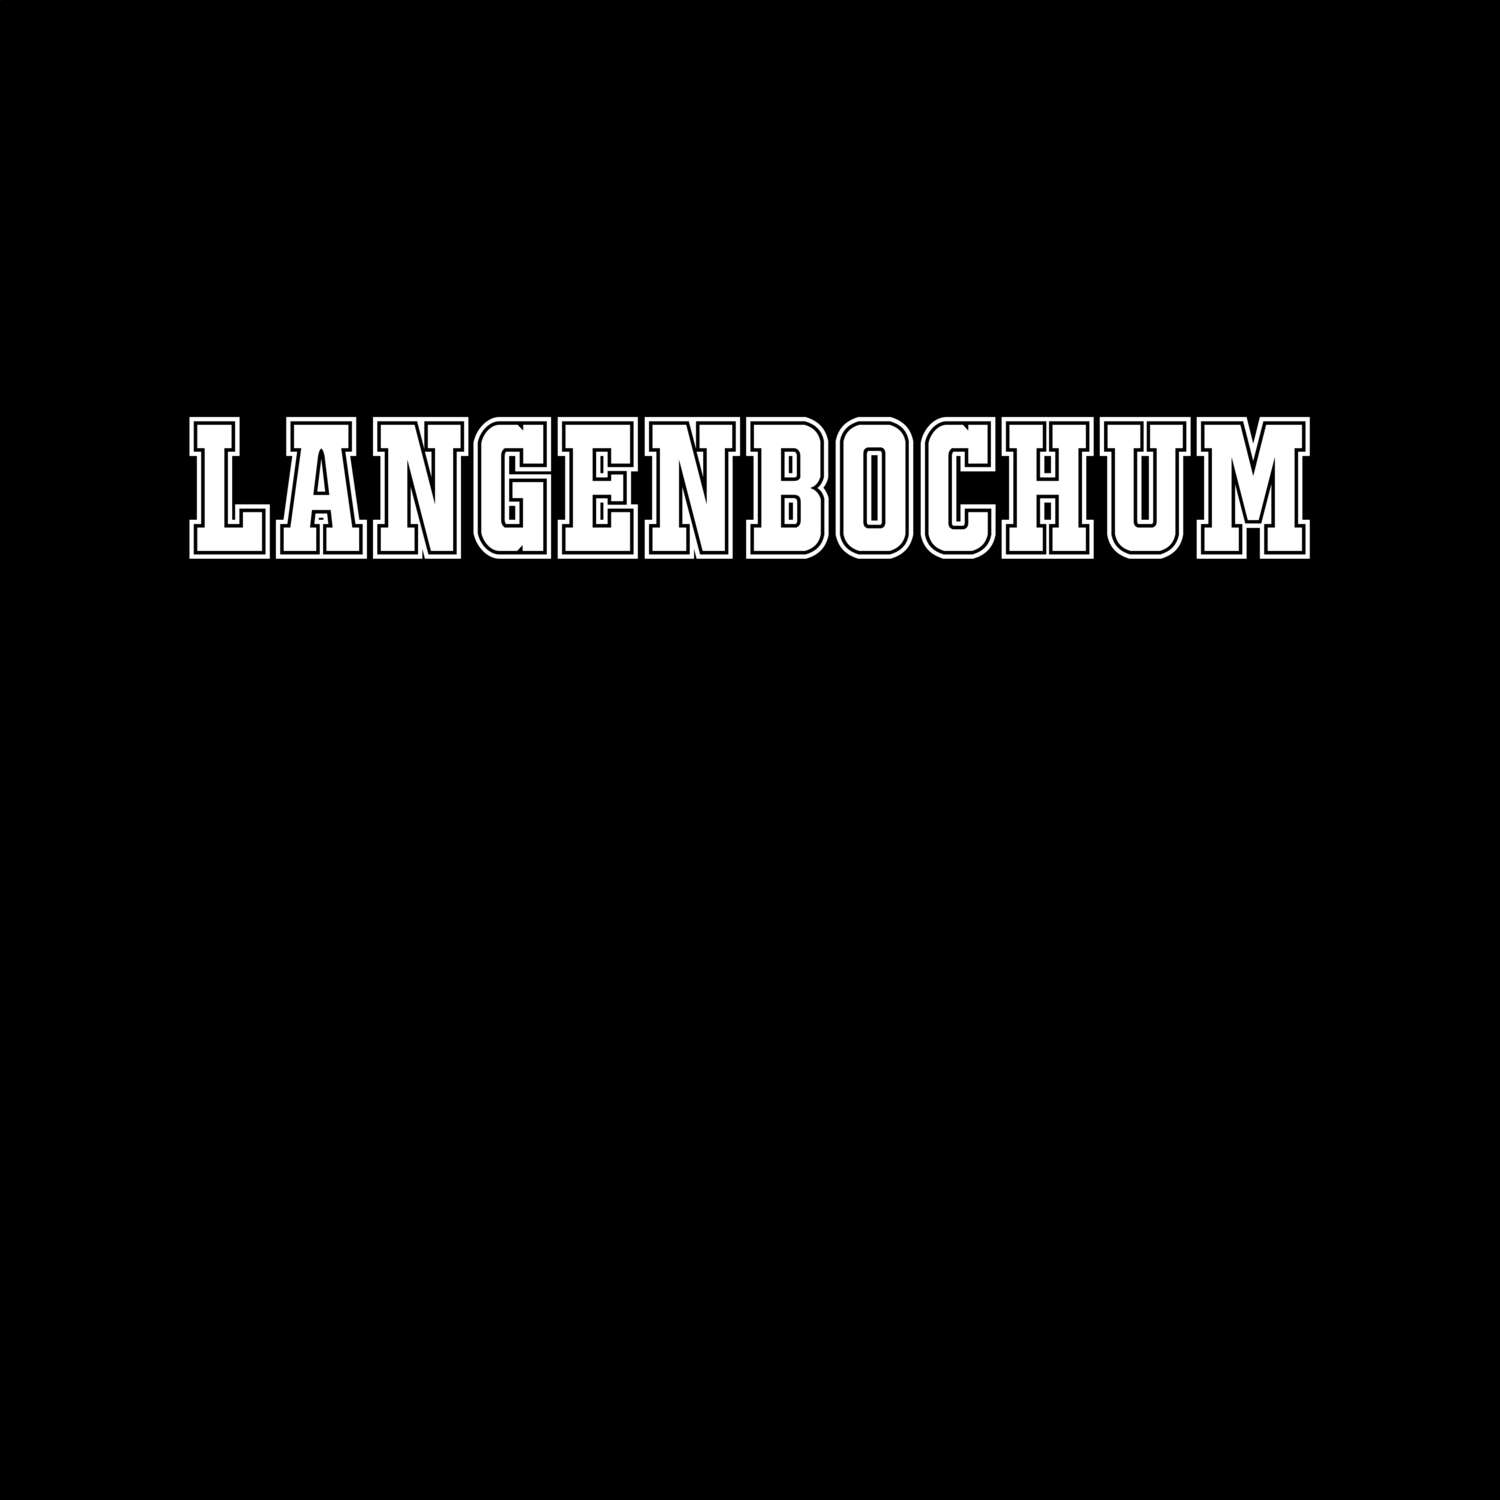 Langenbochum T-Shirt »Classic«